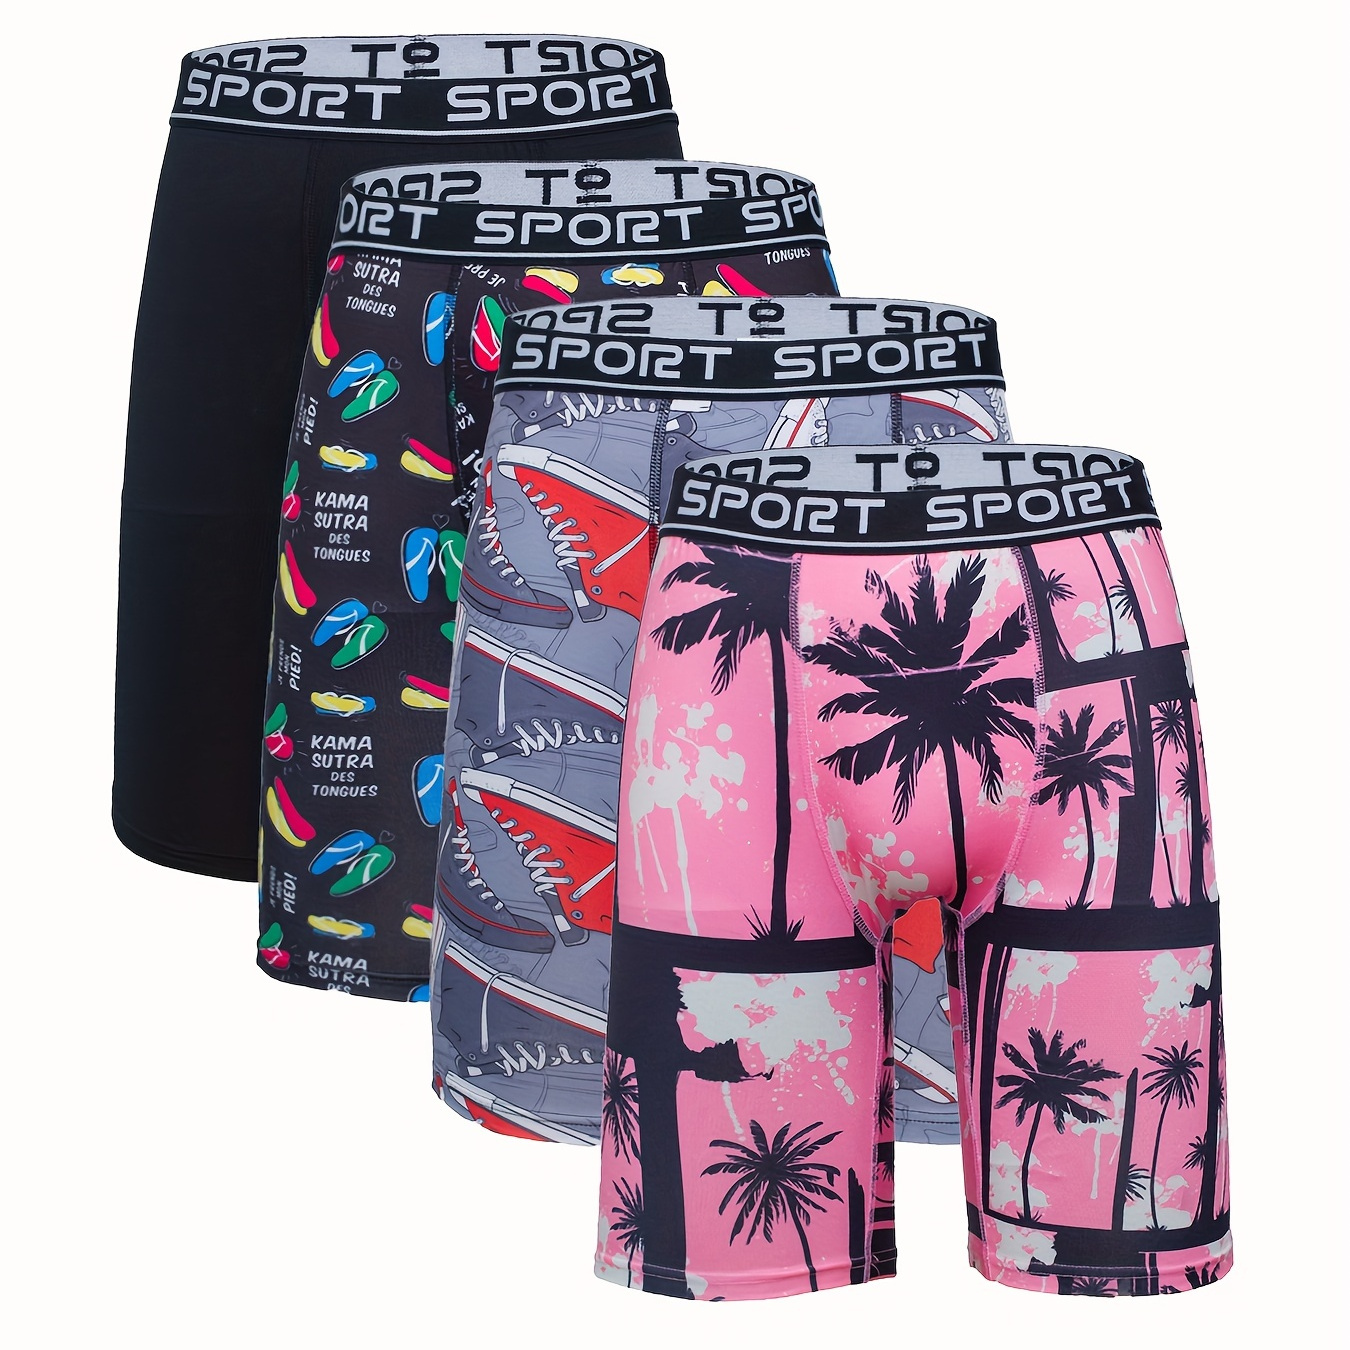 

4pcs Men's Digital Print Fashion Novelty Long Boxer Briefs Shorts, Breathable Comfy Slightly Stretch Boxer Trunks, Swim Trunks For Beach Pool, Sports Shorts, Multicolor Set